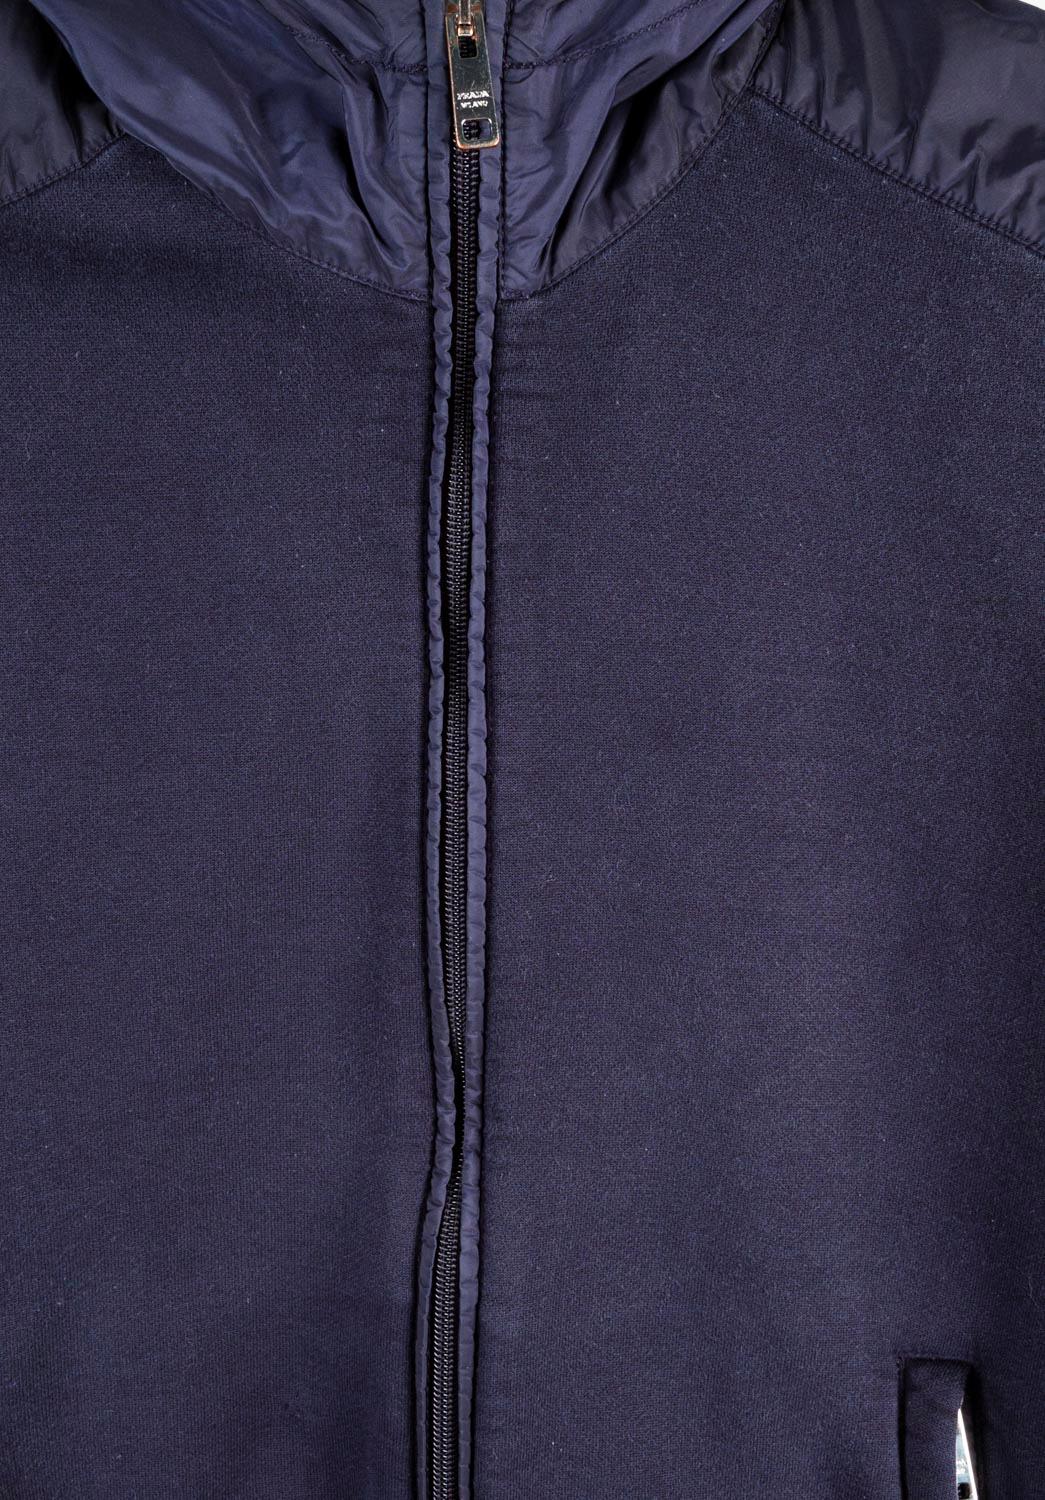  Prada Men Jacket Sweatshirt Light Zipped Hooded Size M, S662 In Good Condition For Sale In Kaunas, LT